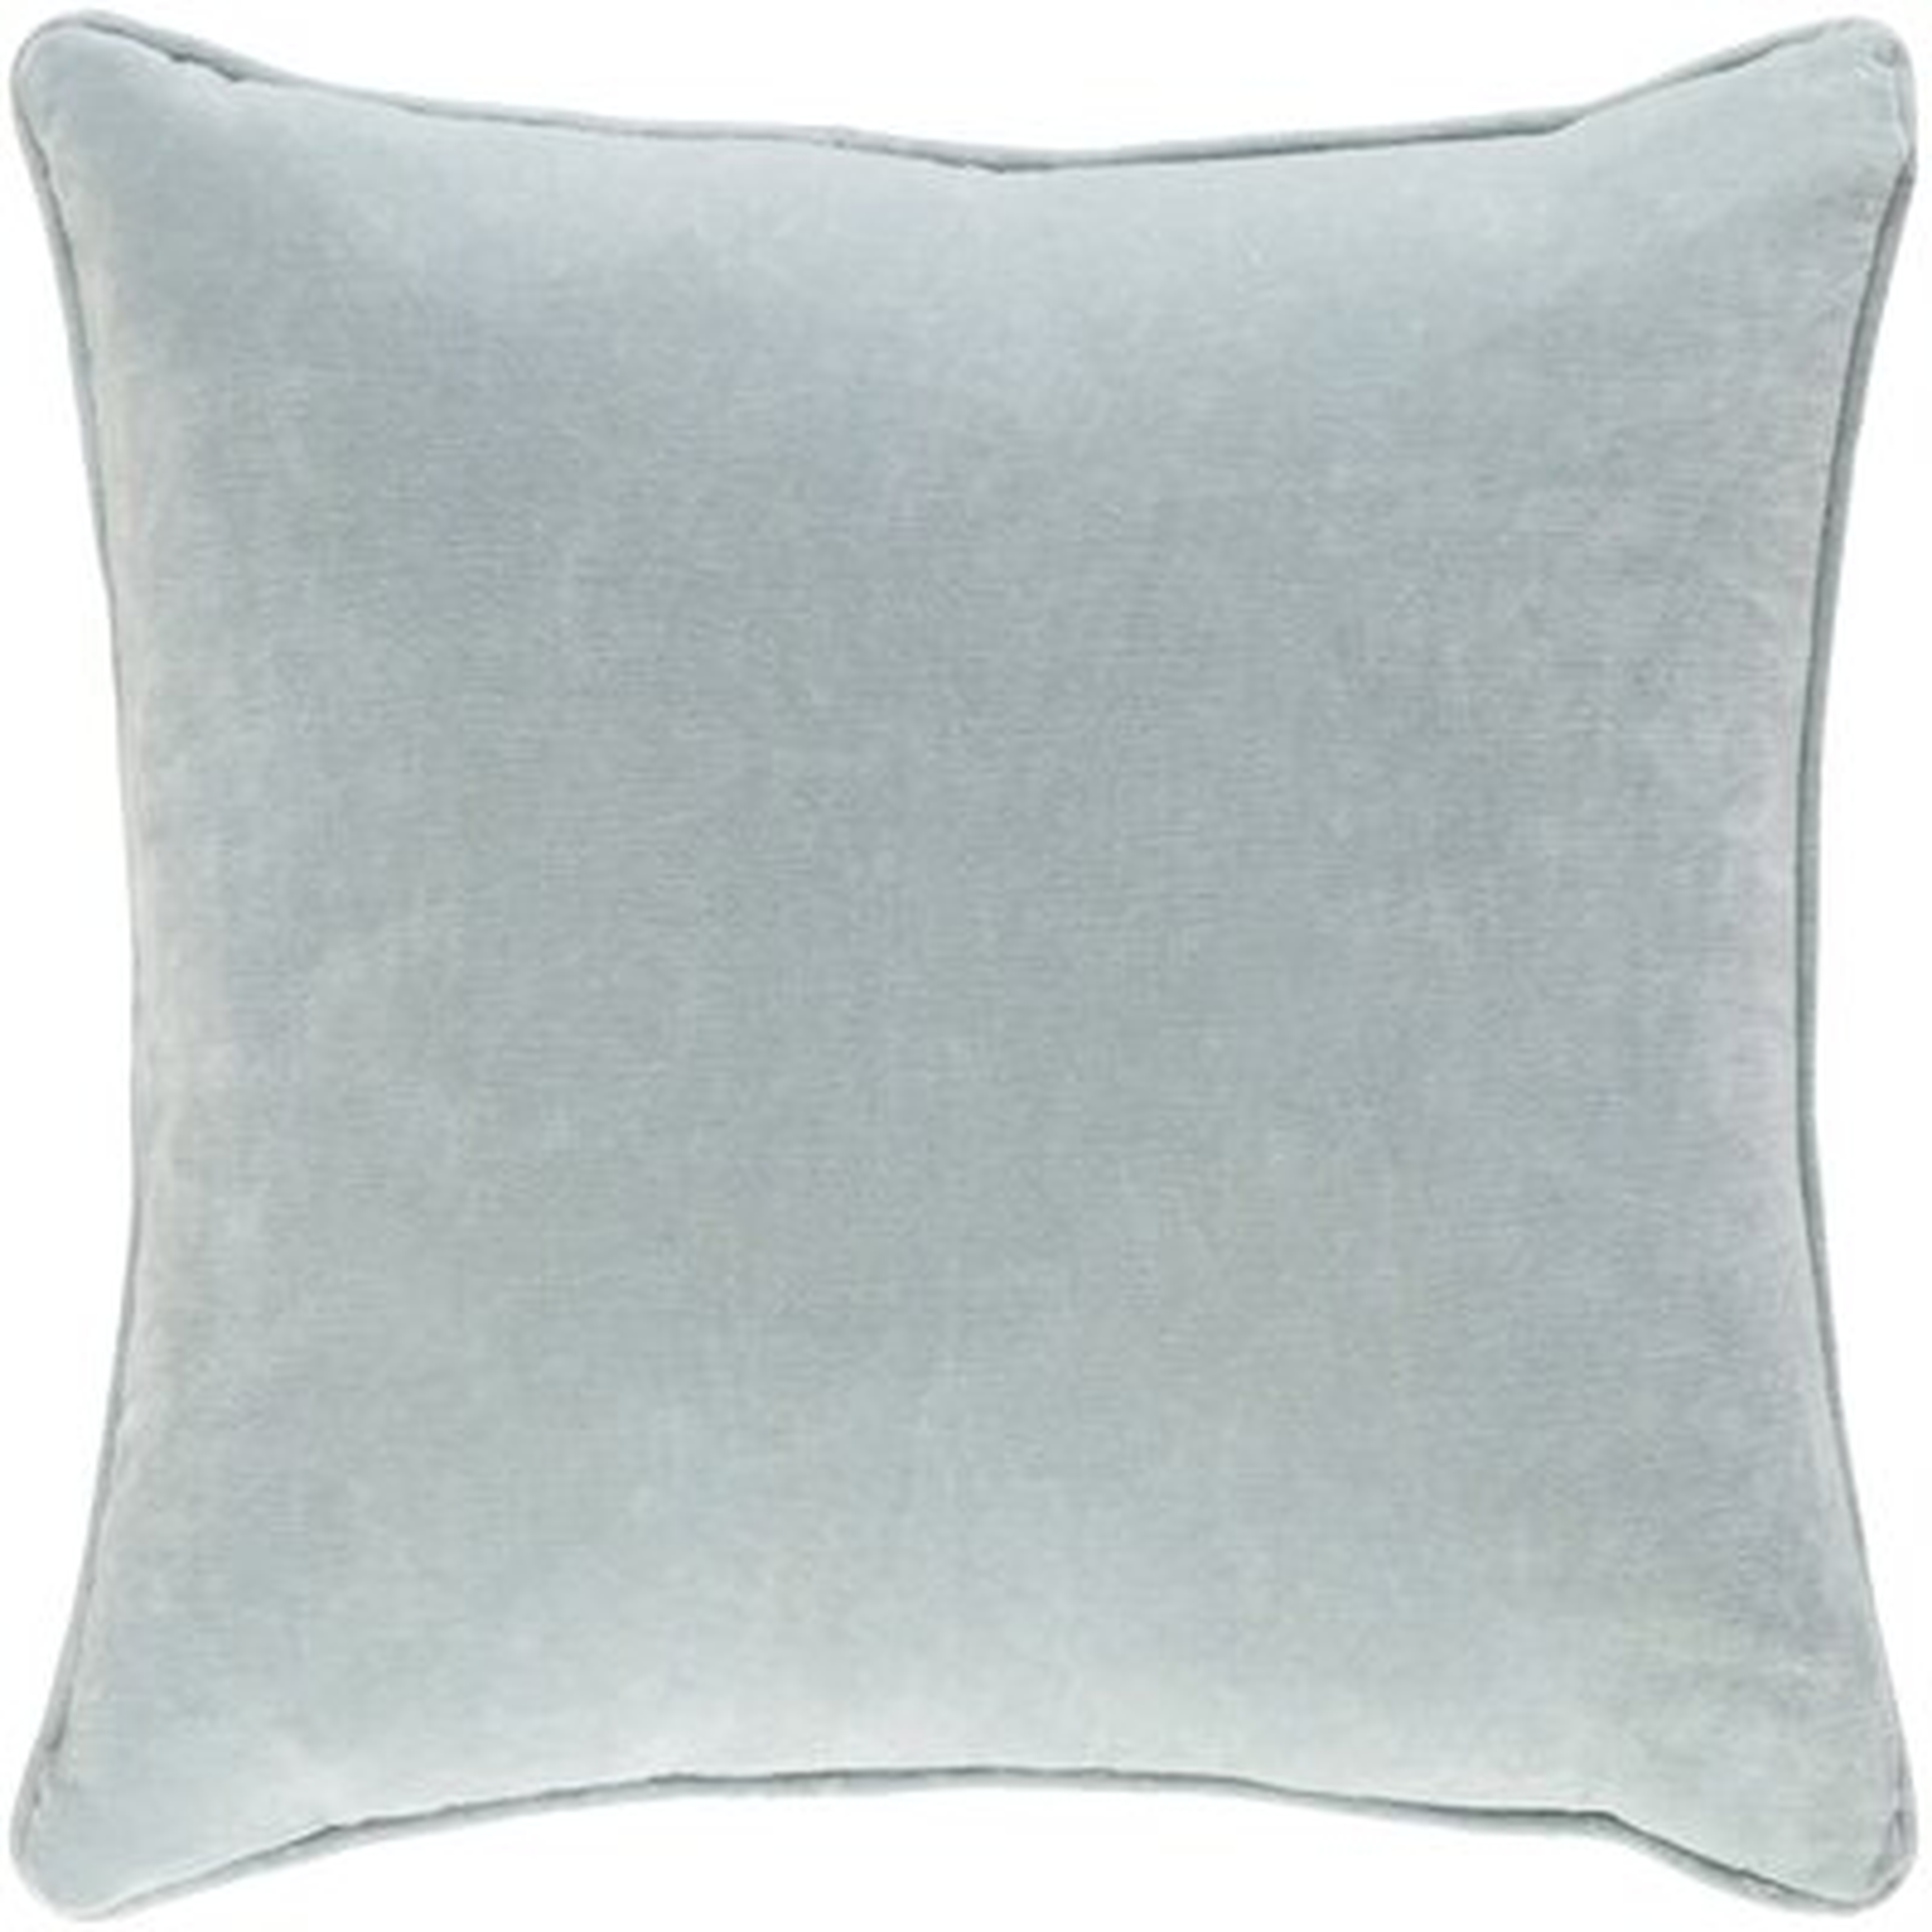 Drewes Square 100% Cotton Pillow Cover - Birch Lane